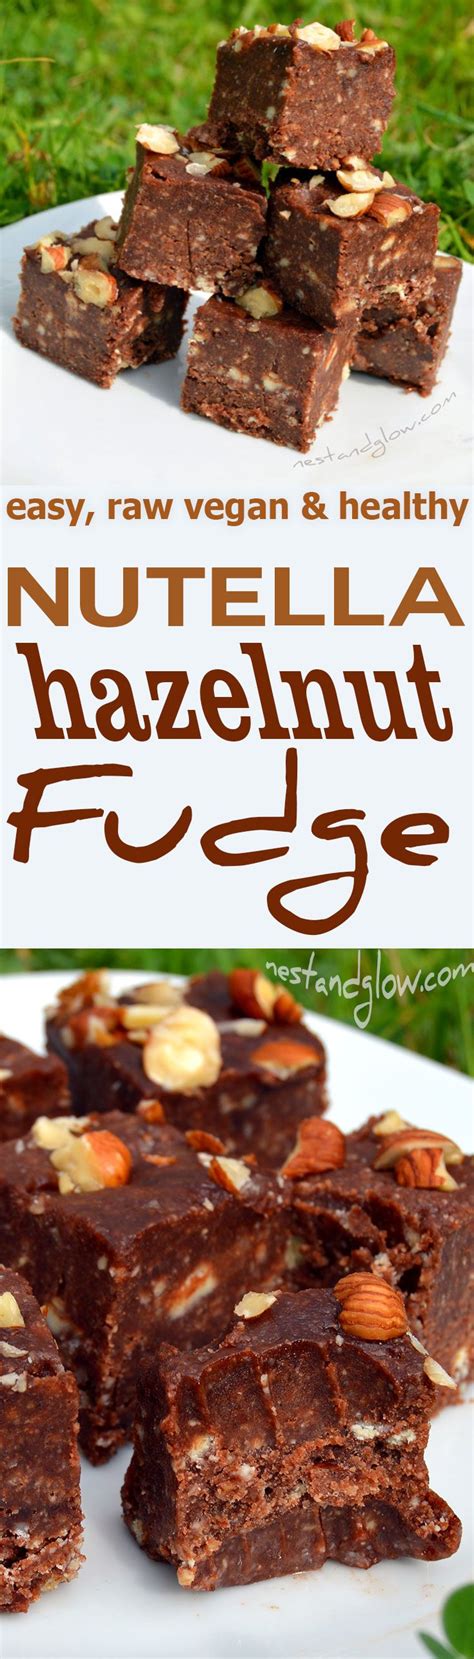 Choc Hazelnut Fudge Tastes Of Nutella But Is Healthy Recipe Vegan